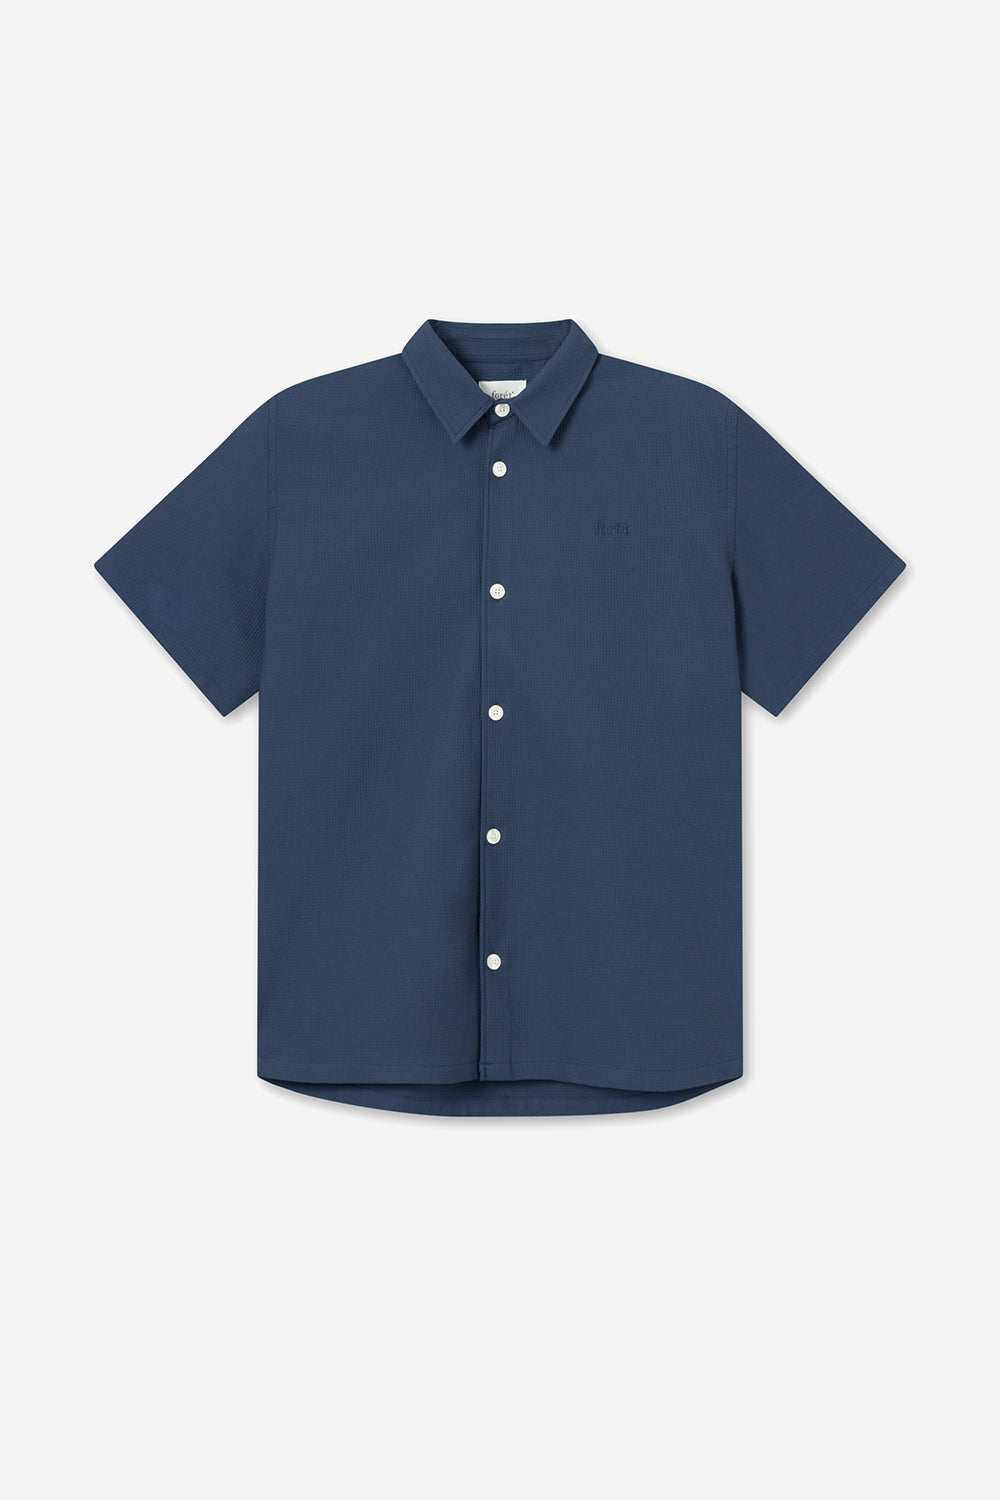 Mens Shirt | Foret Pantera shirt | The Standard Store